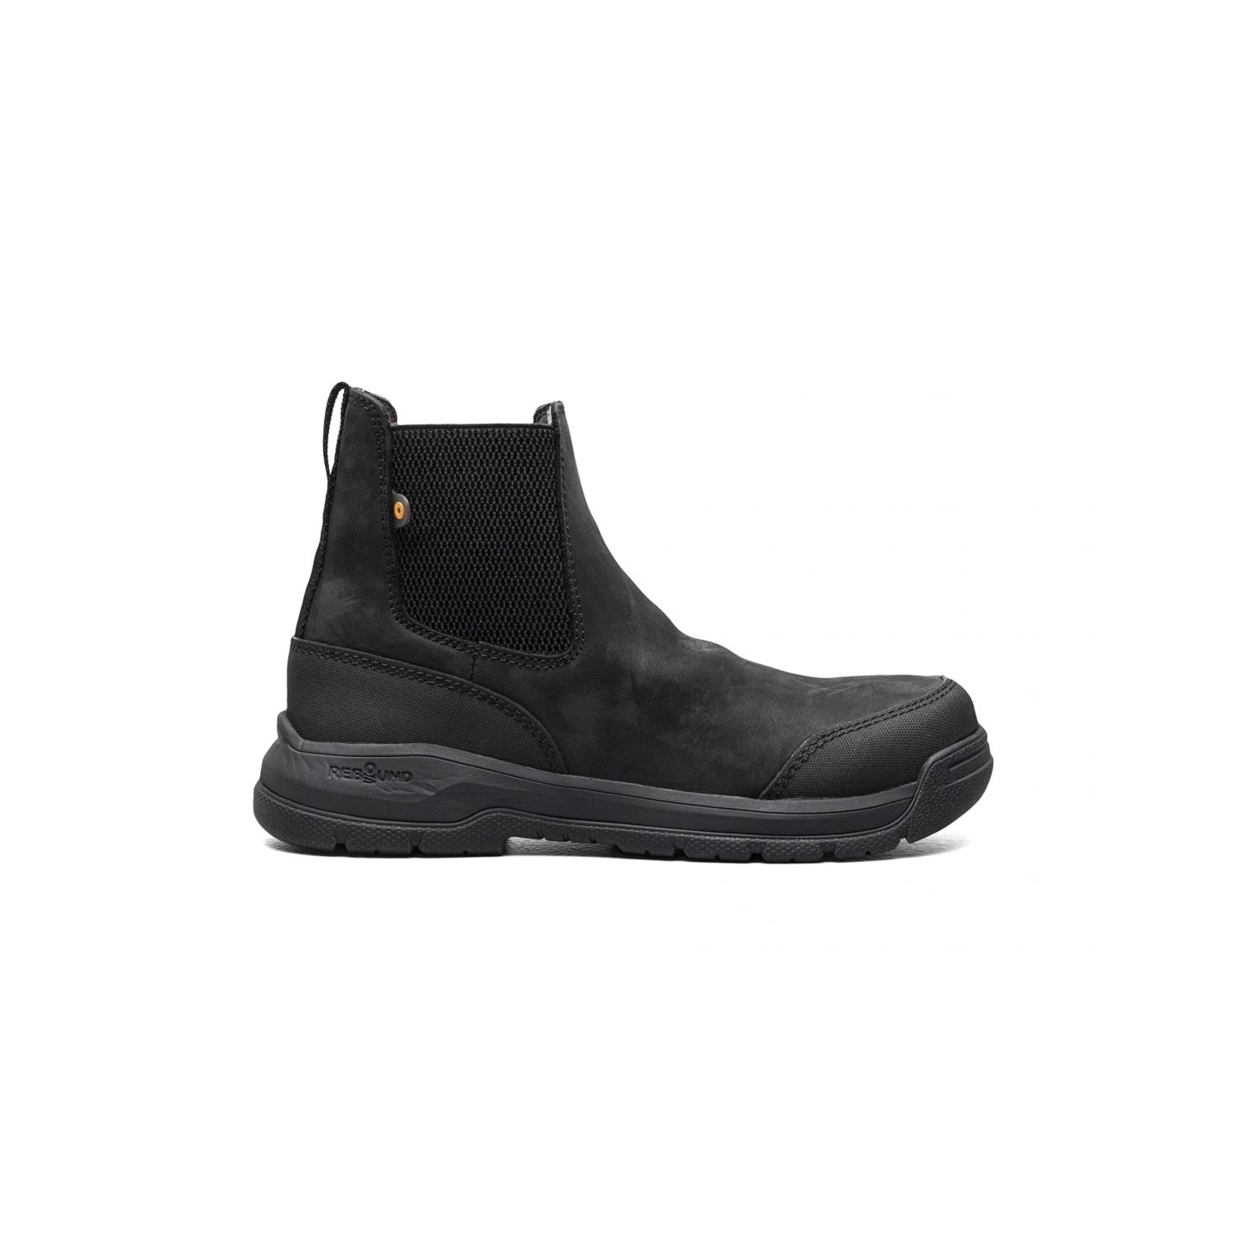 BOGS WORK SERIES Women's Shale Leather Chelsea Composite Toe Waterproof Work Boot Black - 72920CT-001 BLACK - BLACK, 6